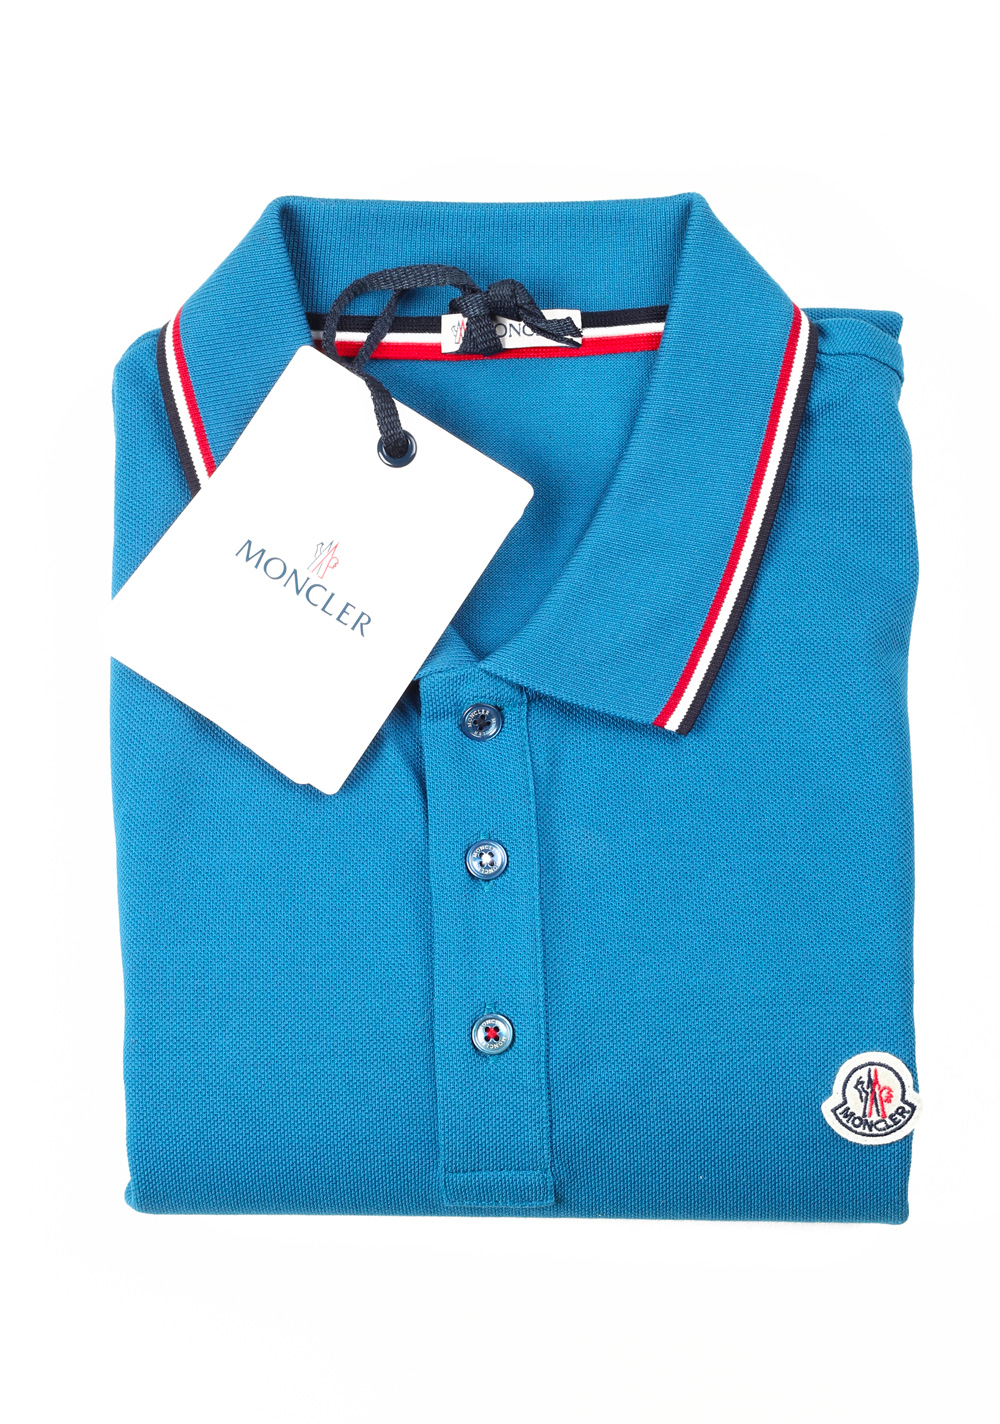 Moncler Long Sleeve Polo Shirt Size 3XL 